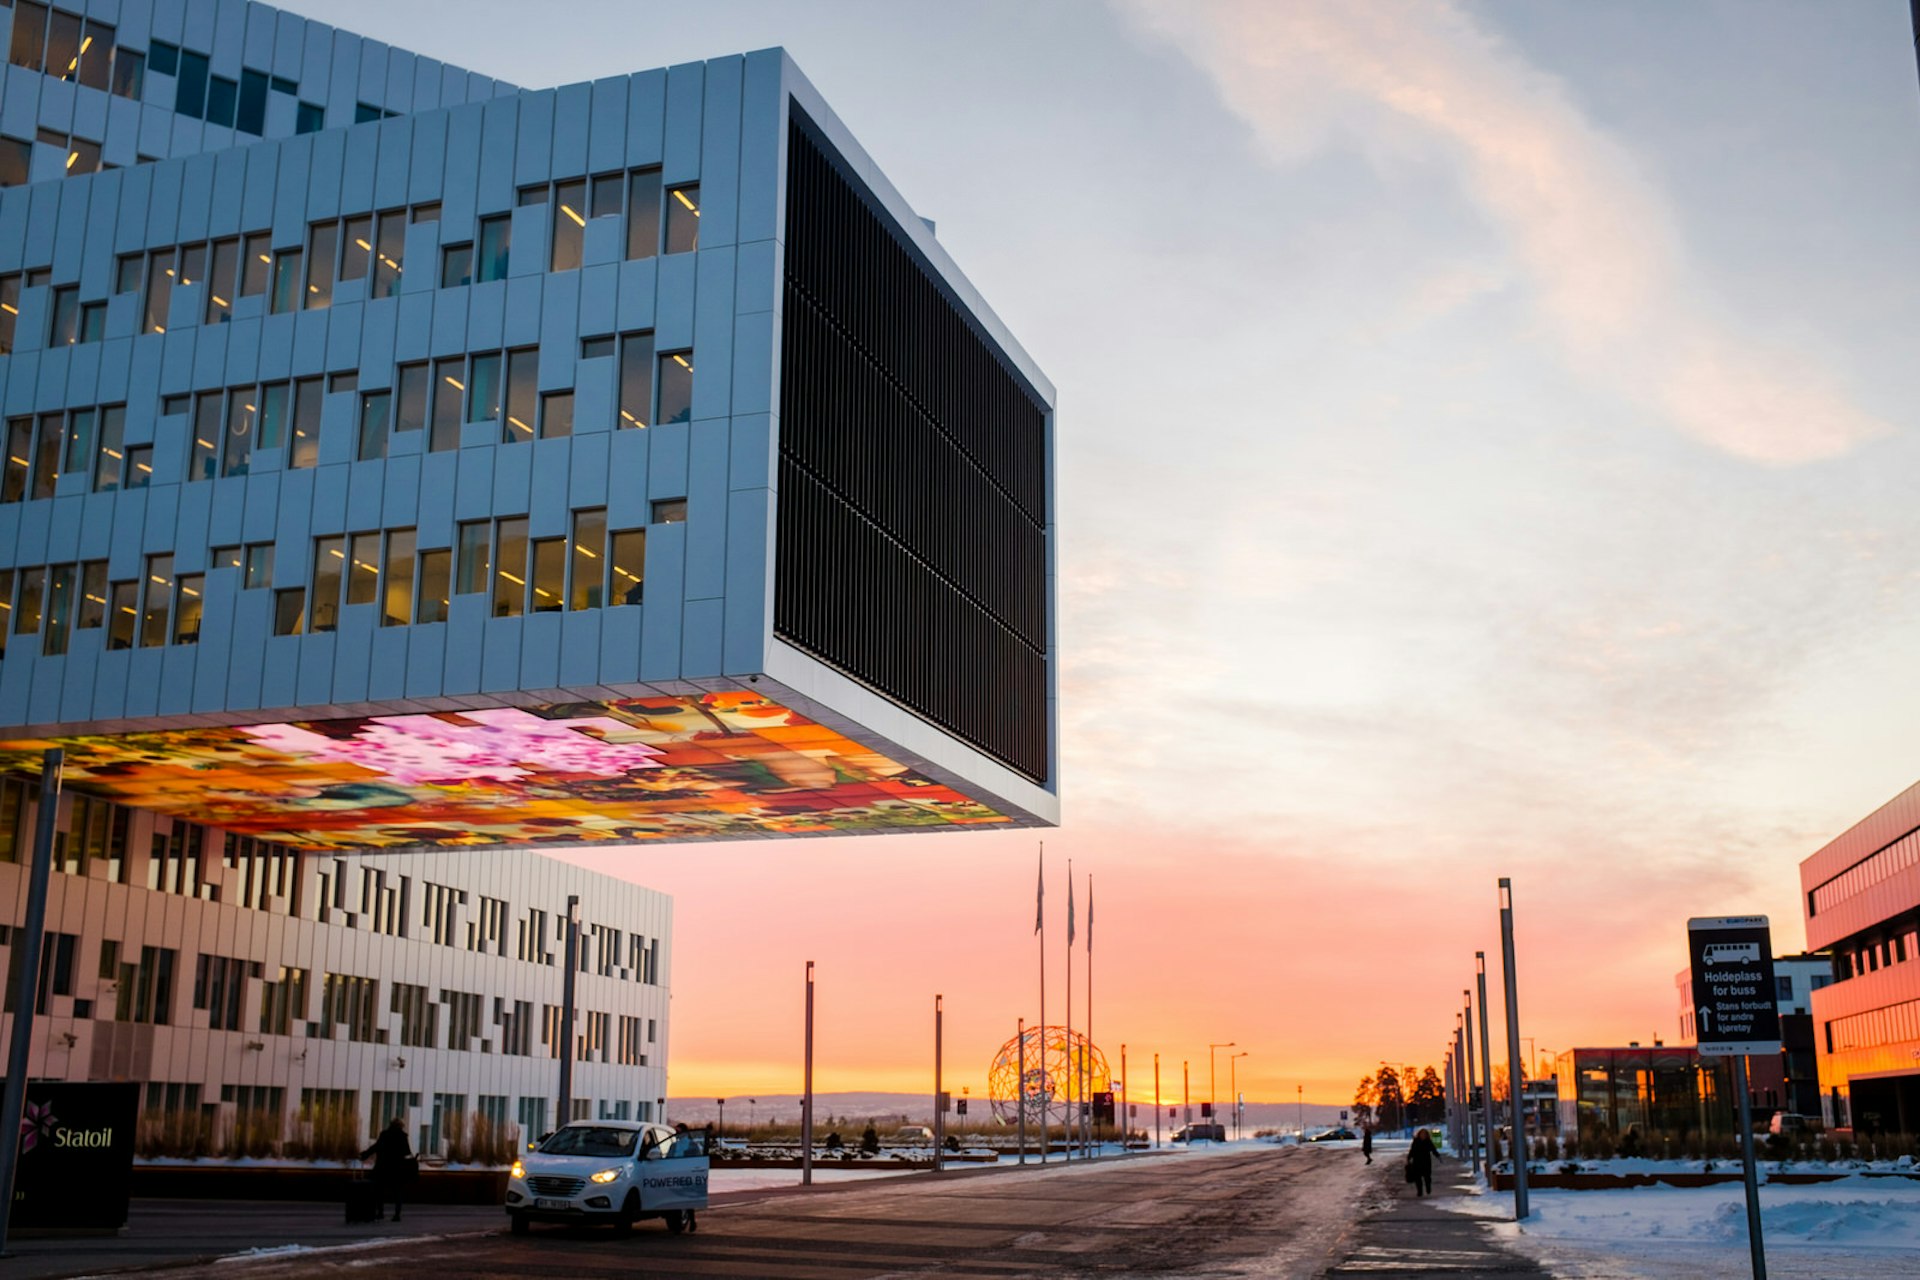 The award-winning headquarters of Statoil, Oslo, Norway © Morten Falch Sortland / Getty Images